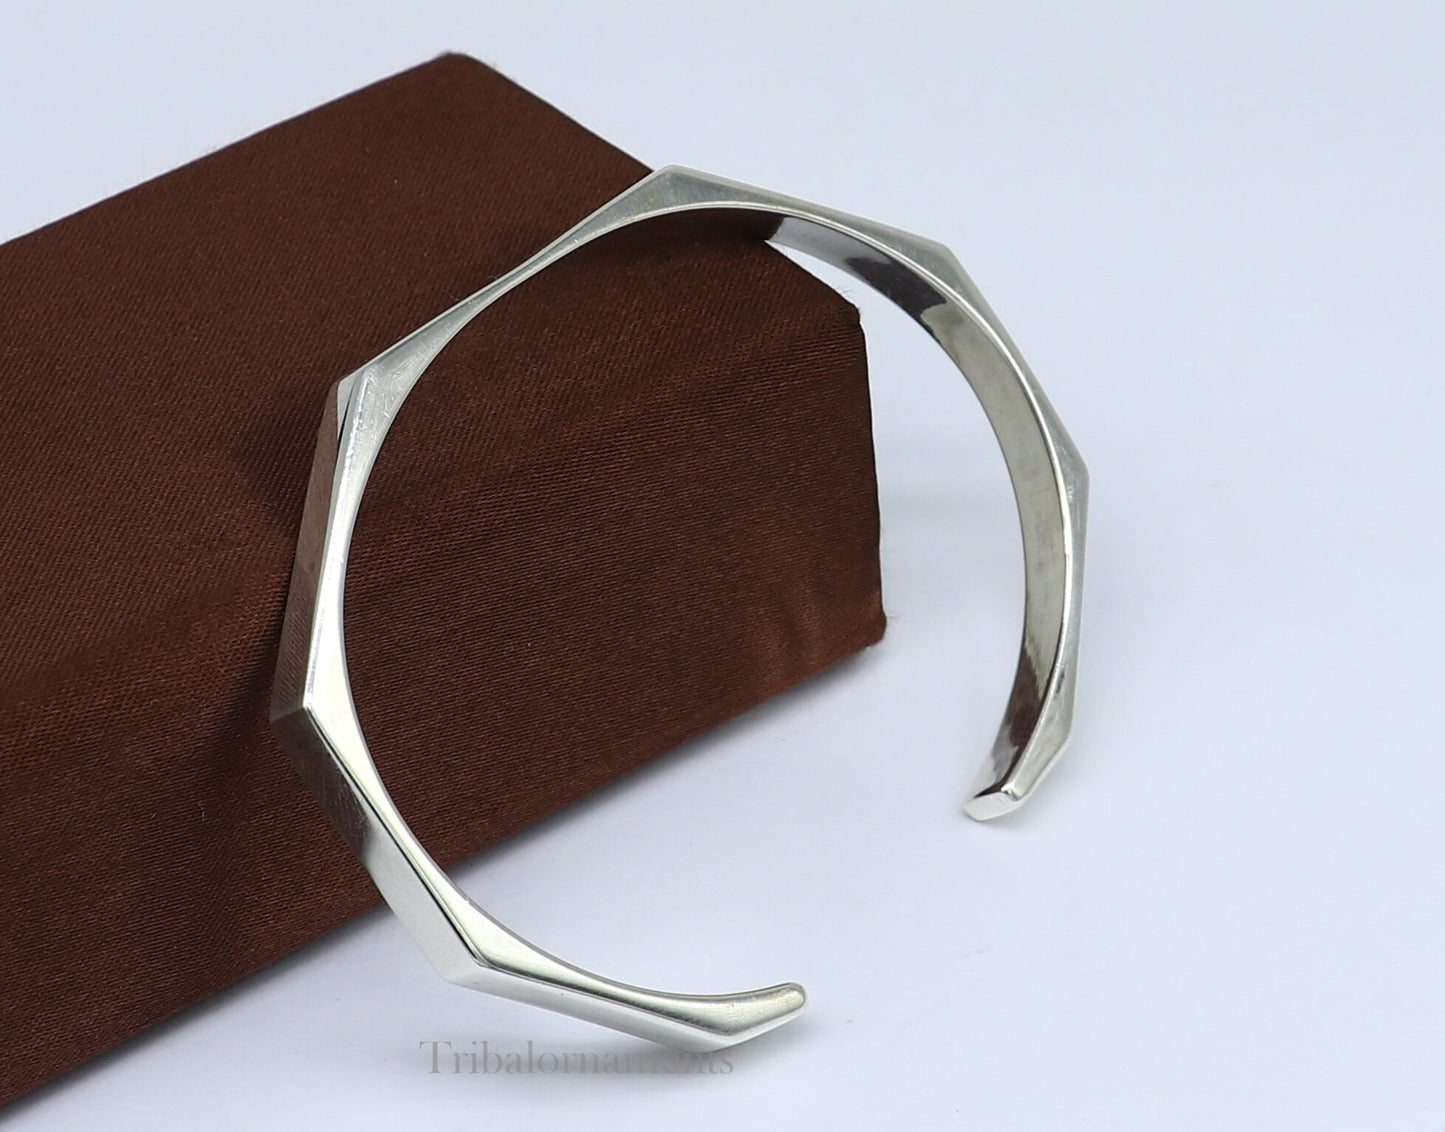 Plain shiny solid 925 sterling silver handmade adjustable cuff bangle bracelet unsex gifting jewelry, solid shiny bracelet nsk374 - TRIBAL ORNAMENTS